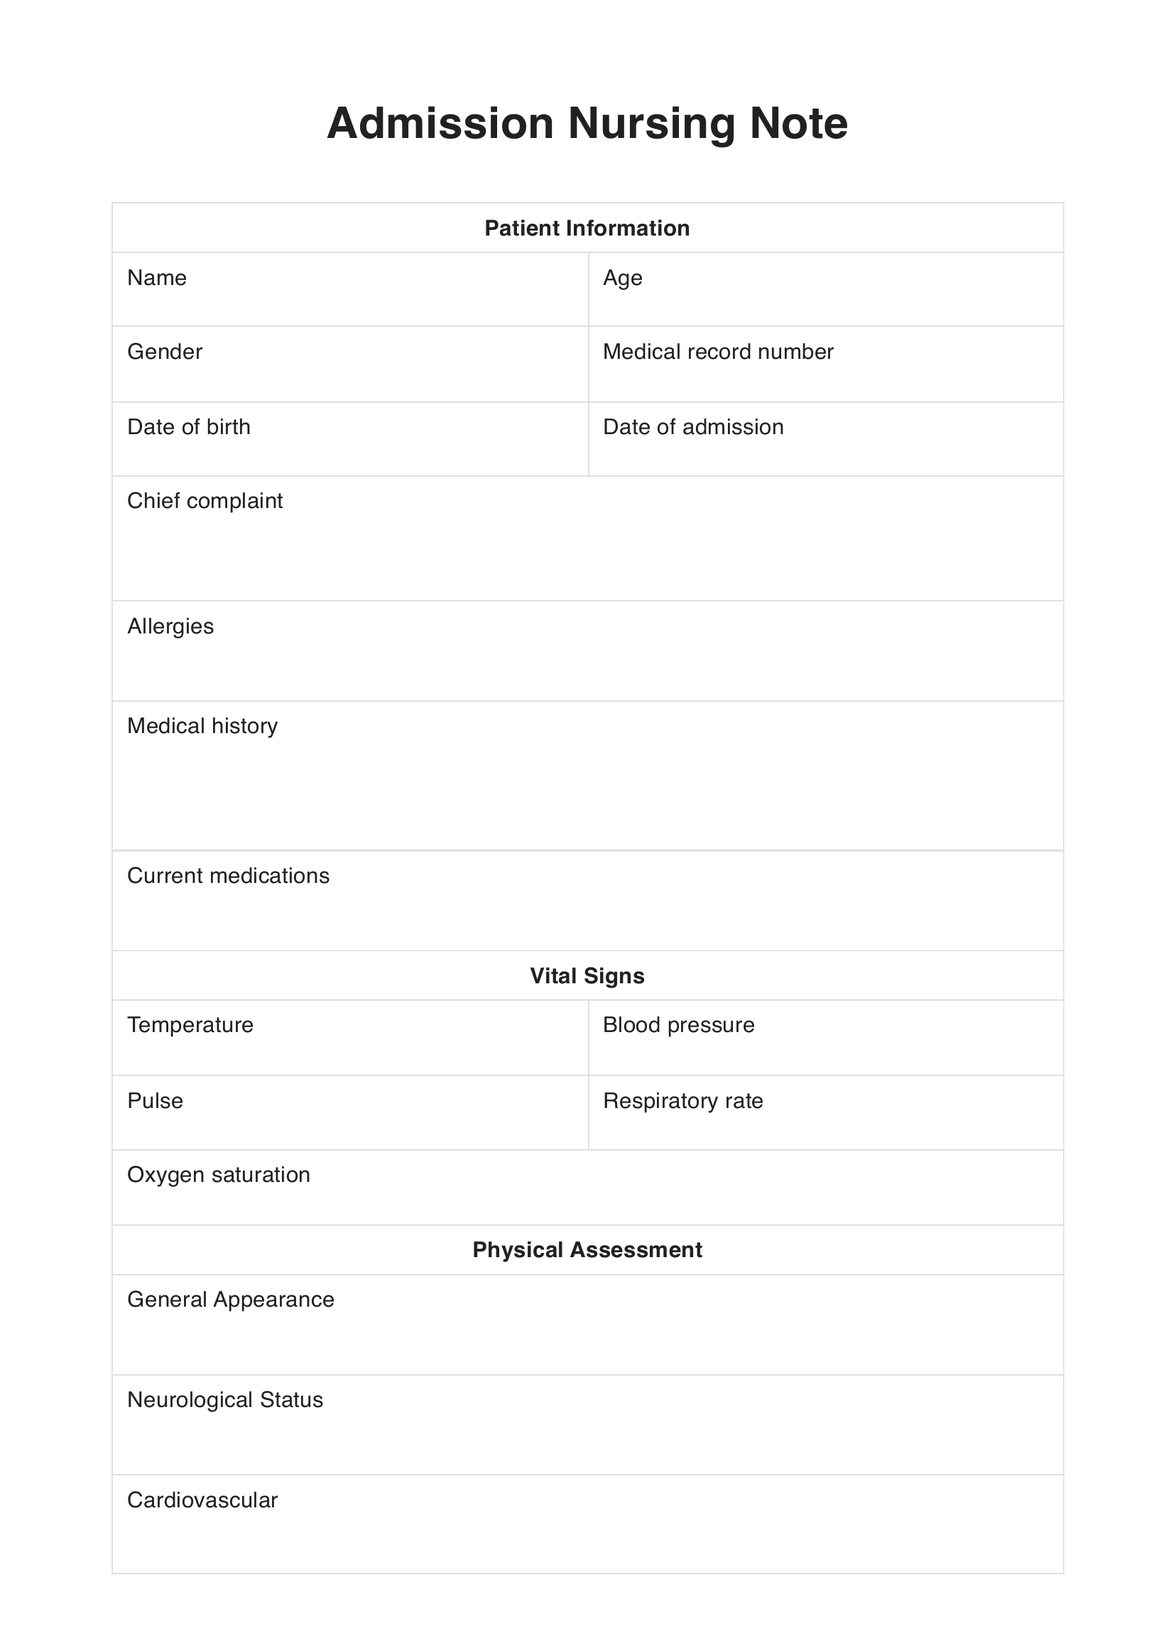 Admission Nursing Note PDF Example